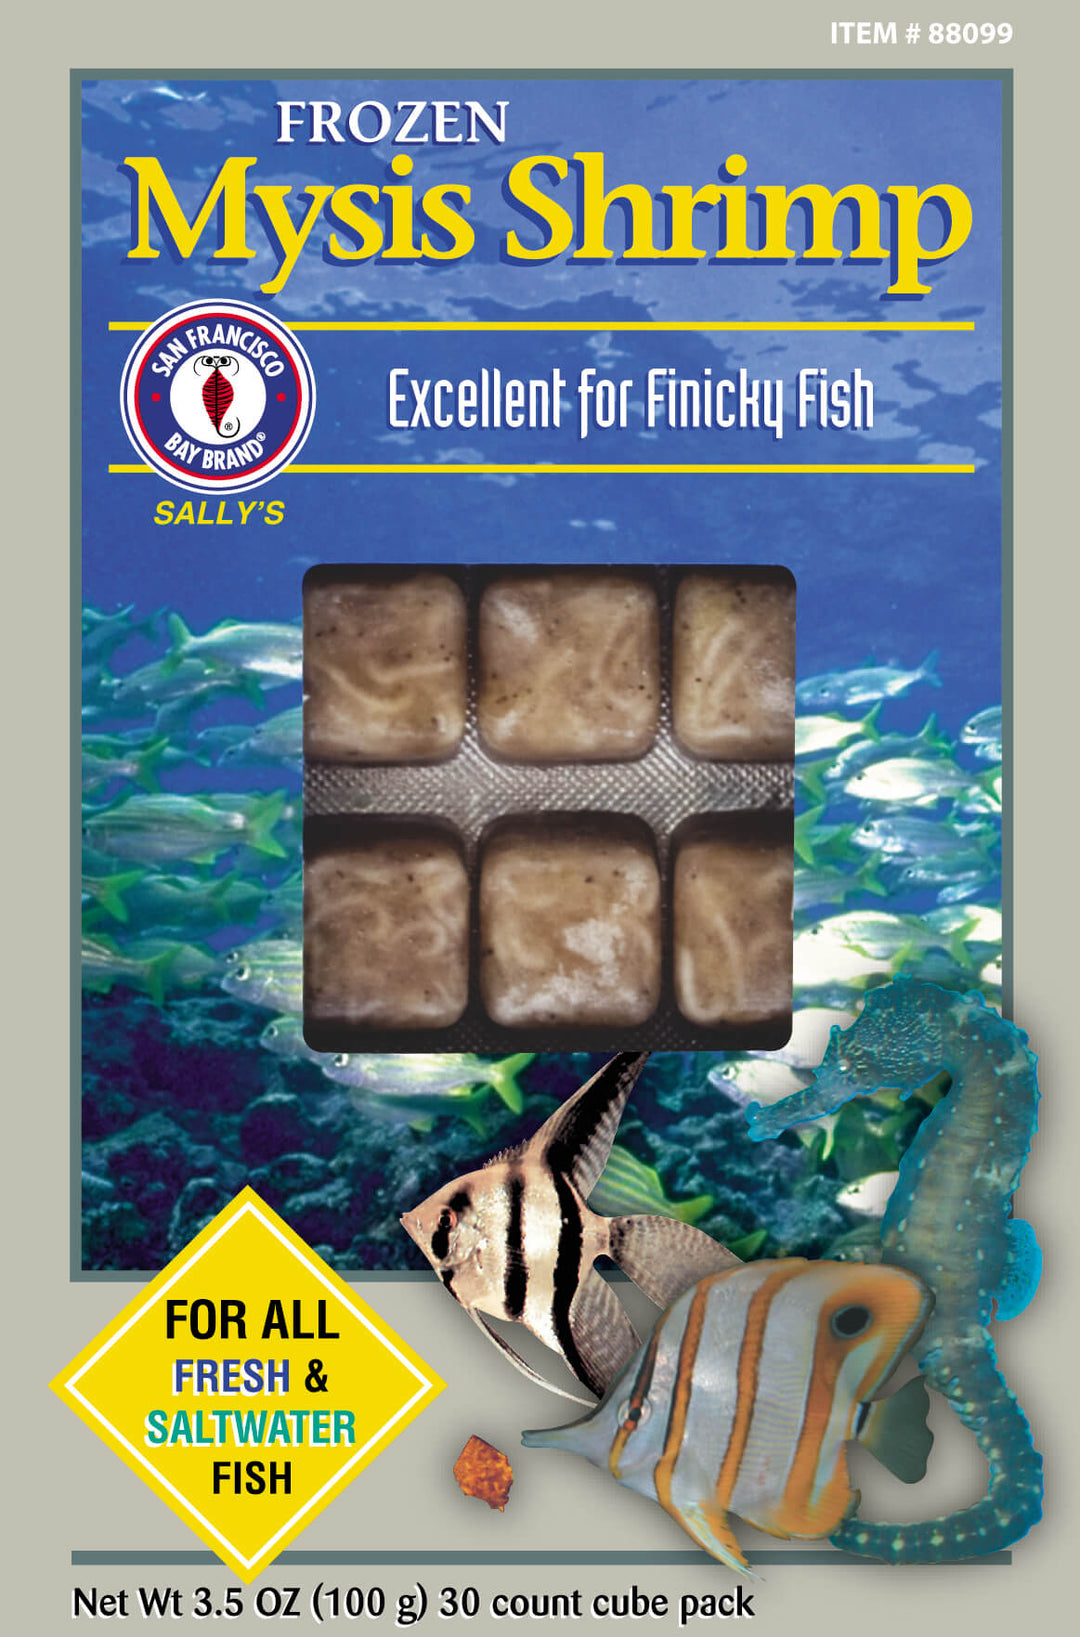 San Francisco Bay Brand - Frozen Food - Mysis Shrimp 30 cubs 3.5oz